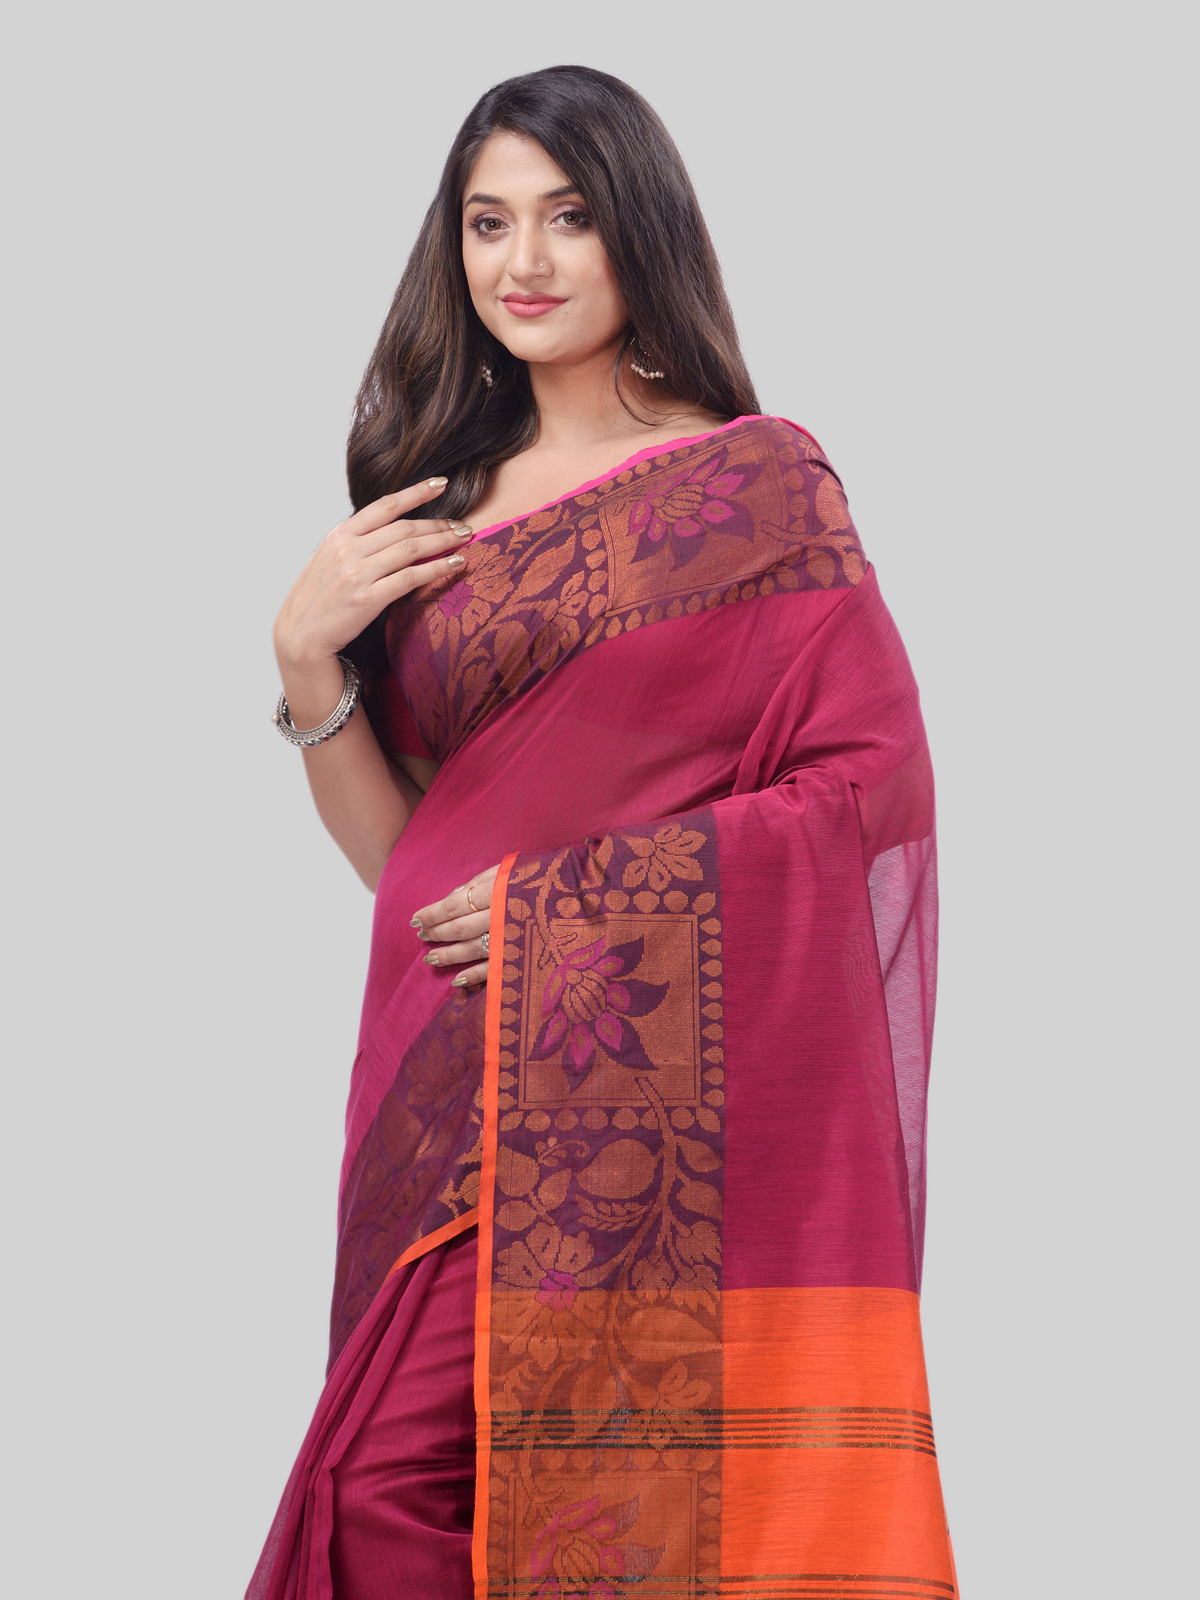 DESH BIDESH Women`s Tant Cotton Silk Handloom Cotton Saree Pushpomala With Blouse Piece(Pink Orange)